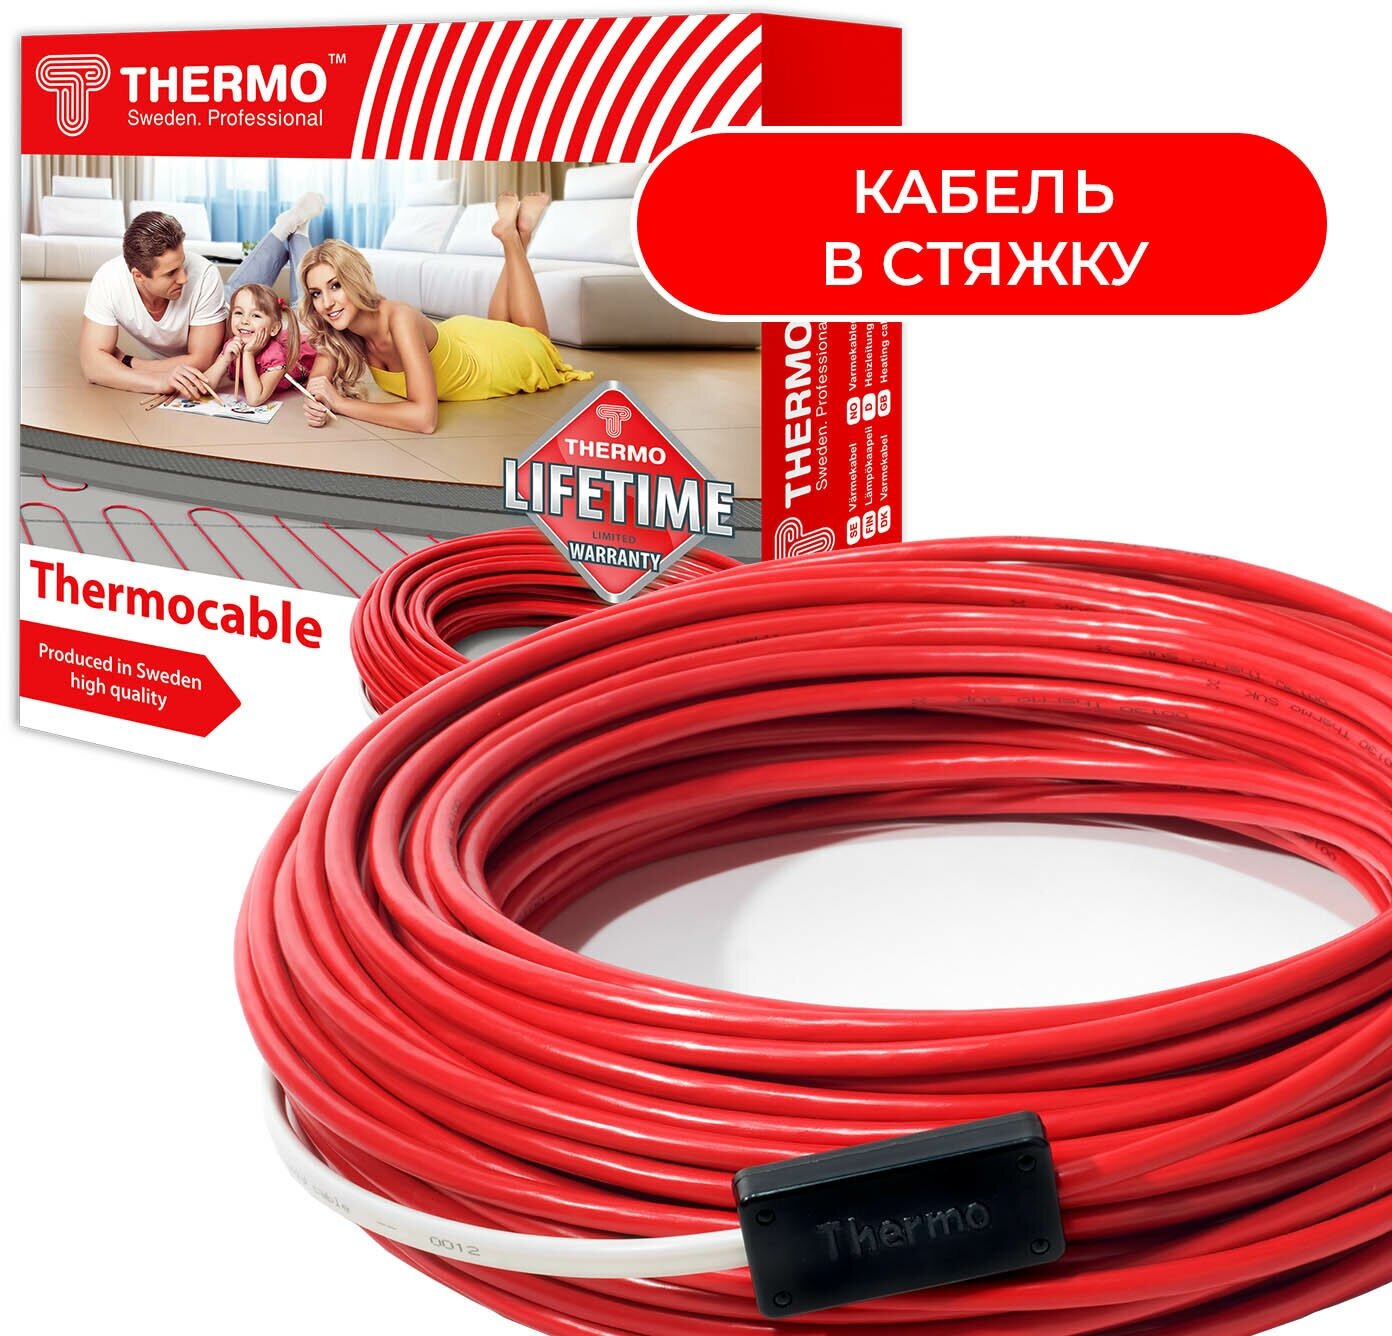 Греющий кабель Thermocable SVK-20-1500 73 м